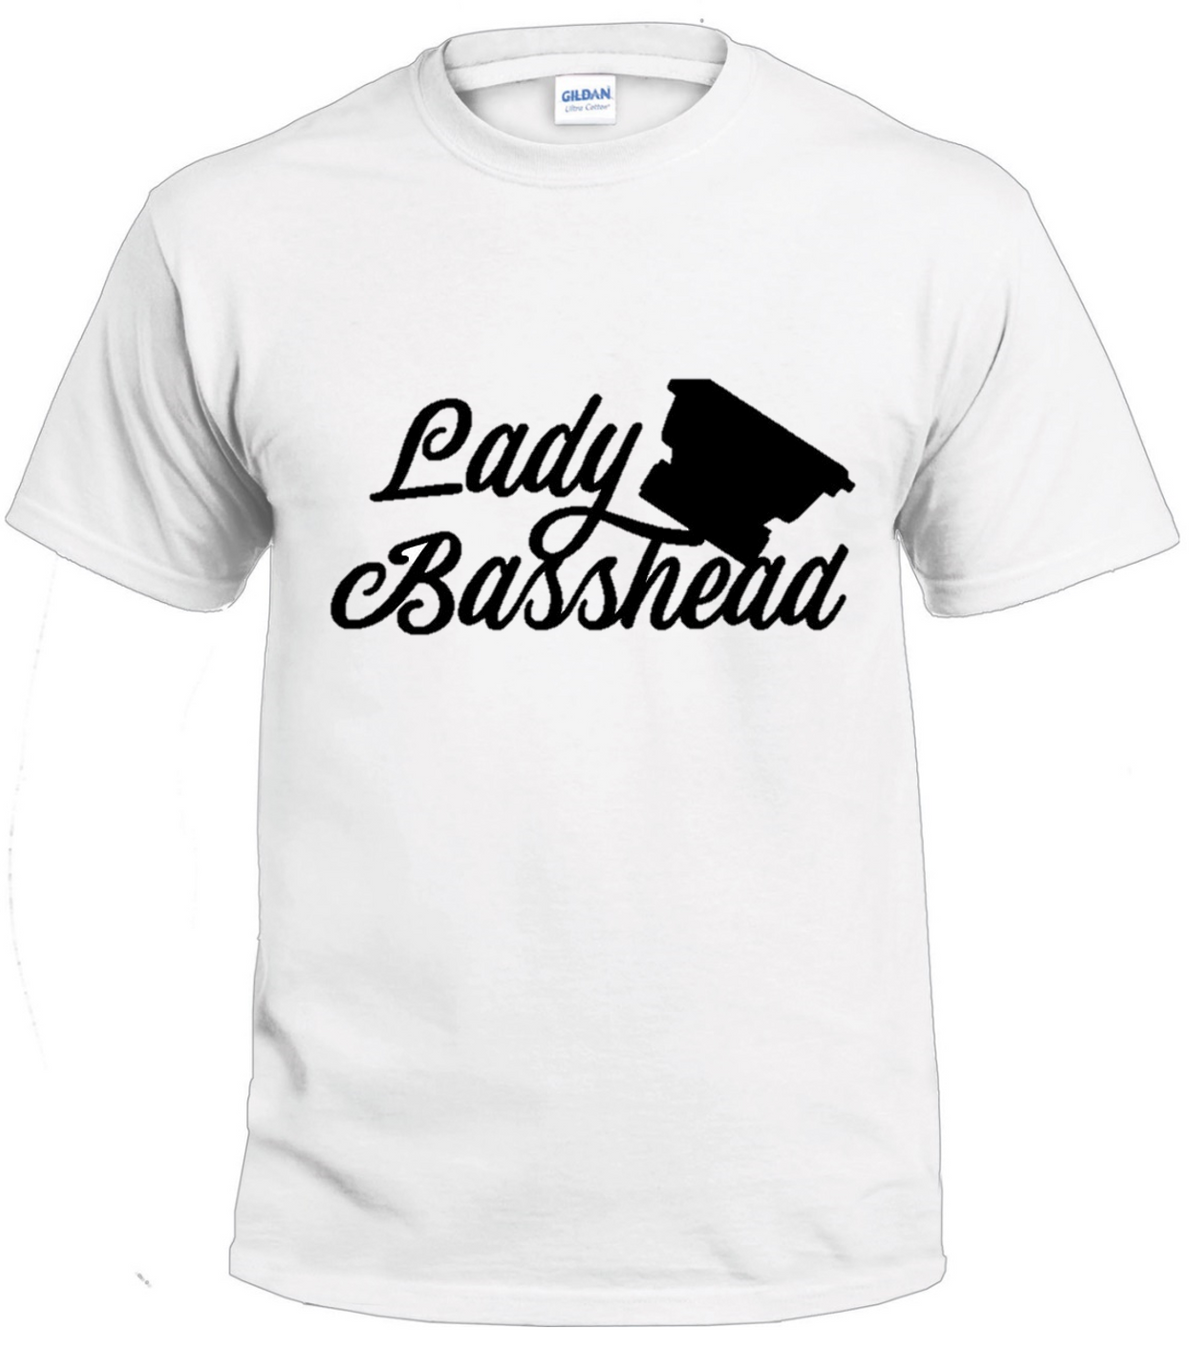 Lady Basshead with Sub Basshead tshirt